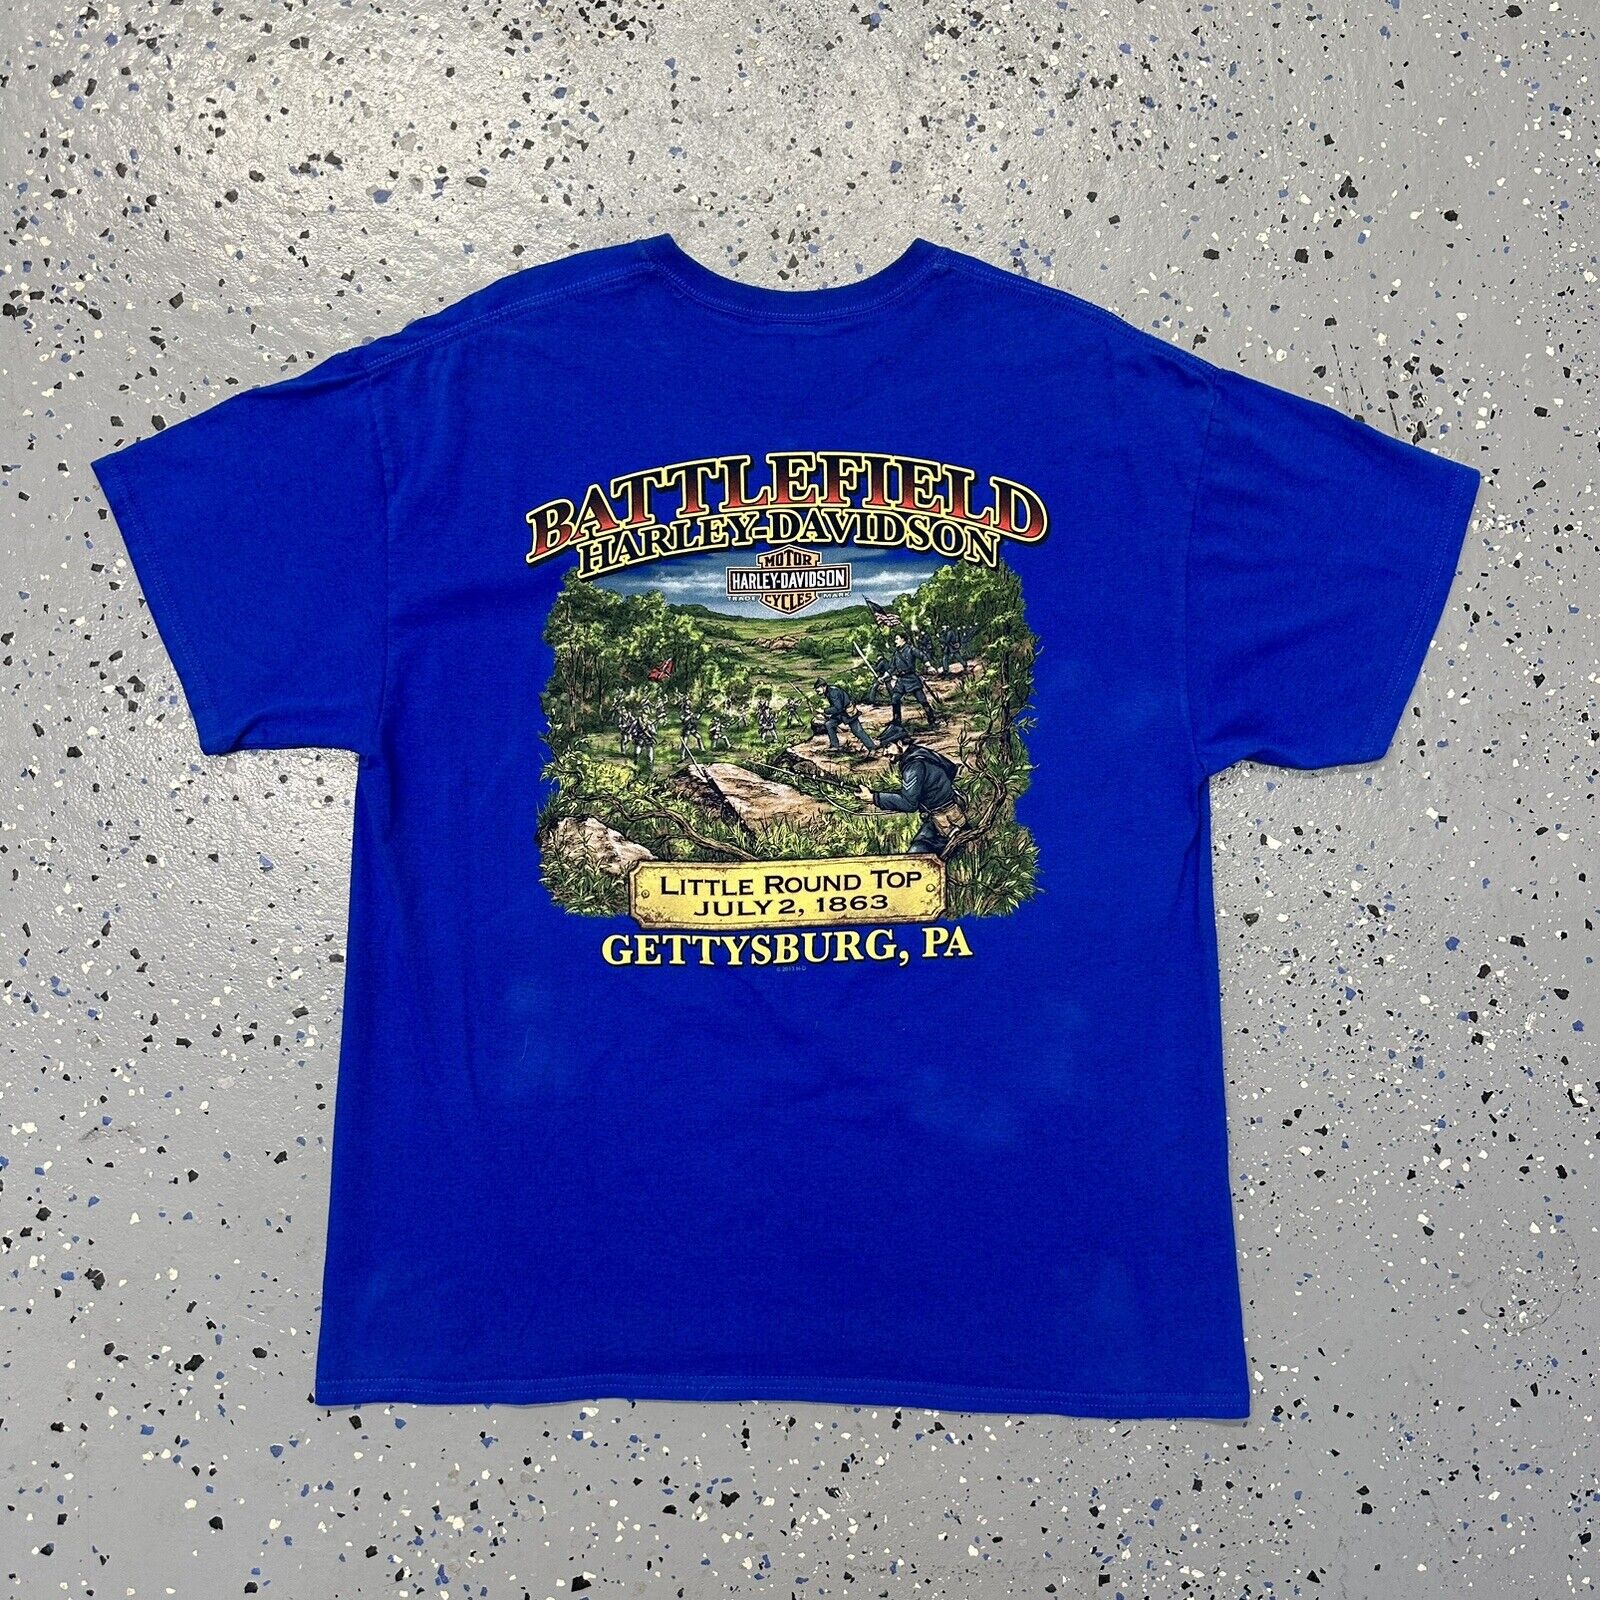 2013 Harley Davidson Gettysburg Pennsylvania War Graphic Shirt XL